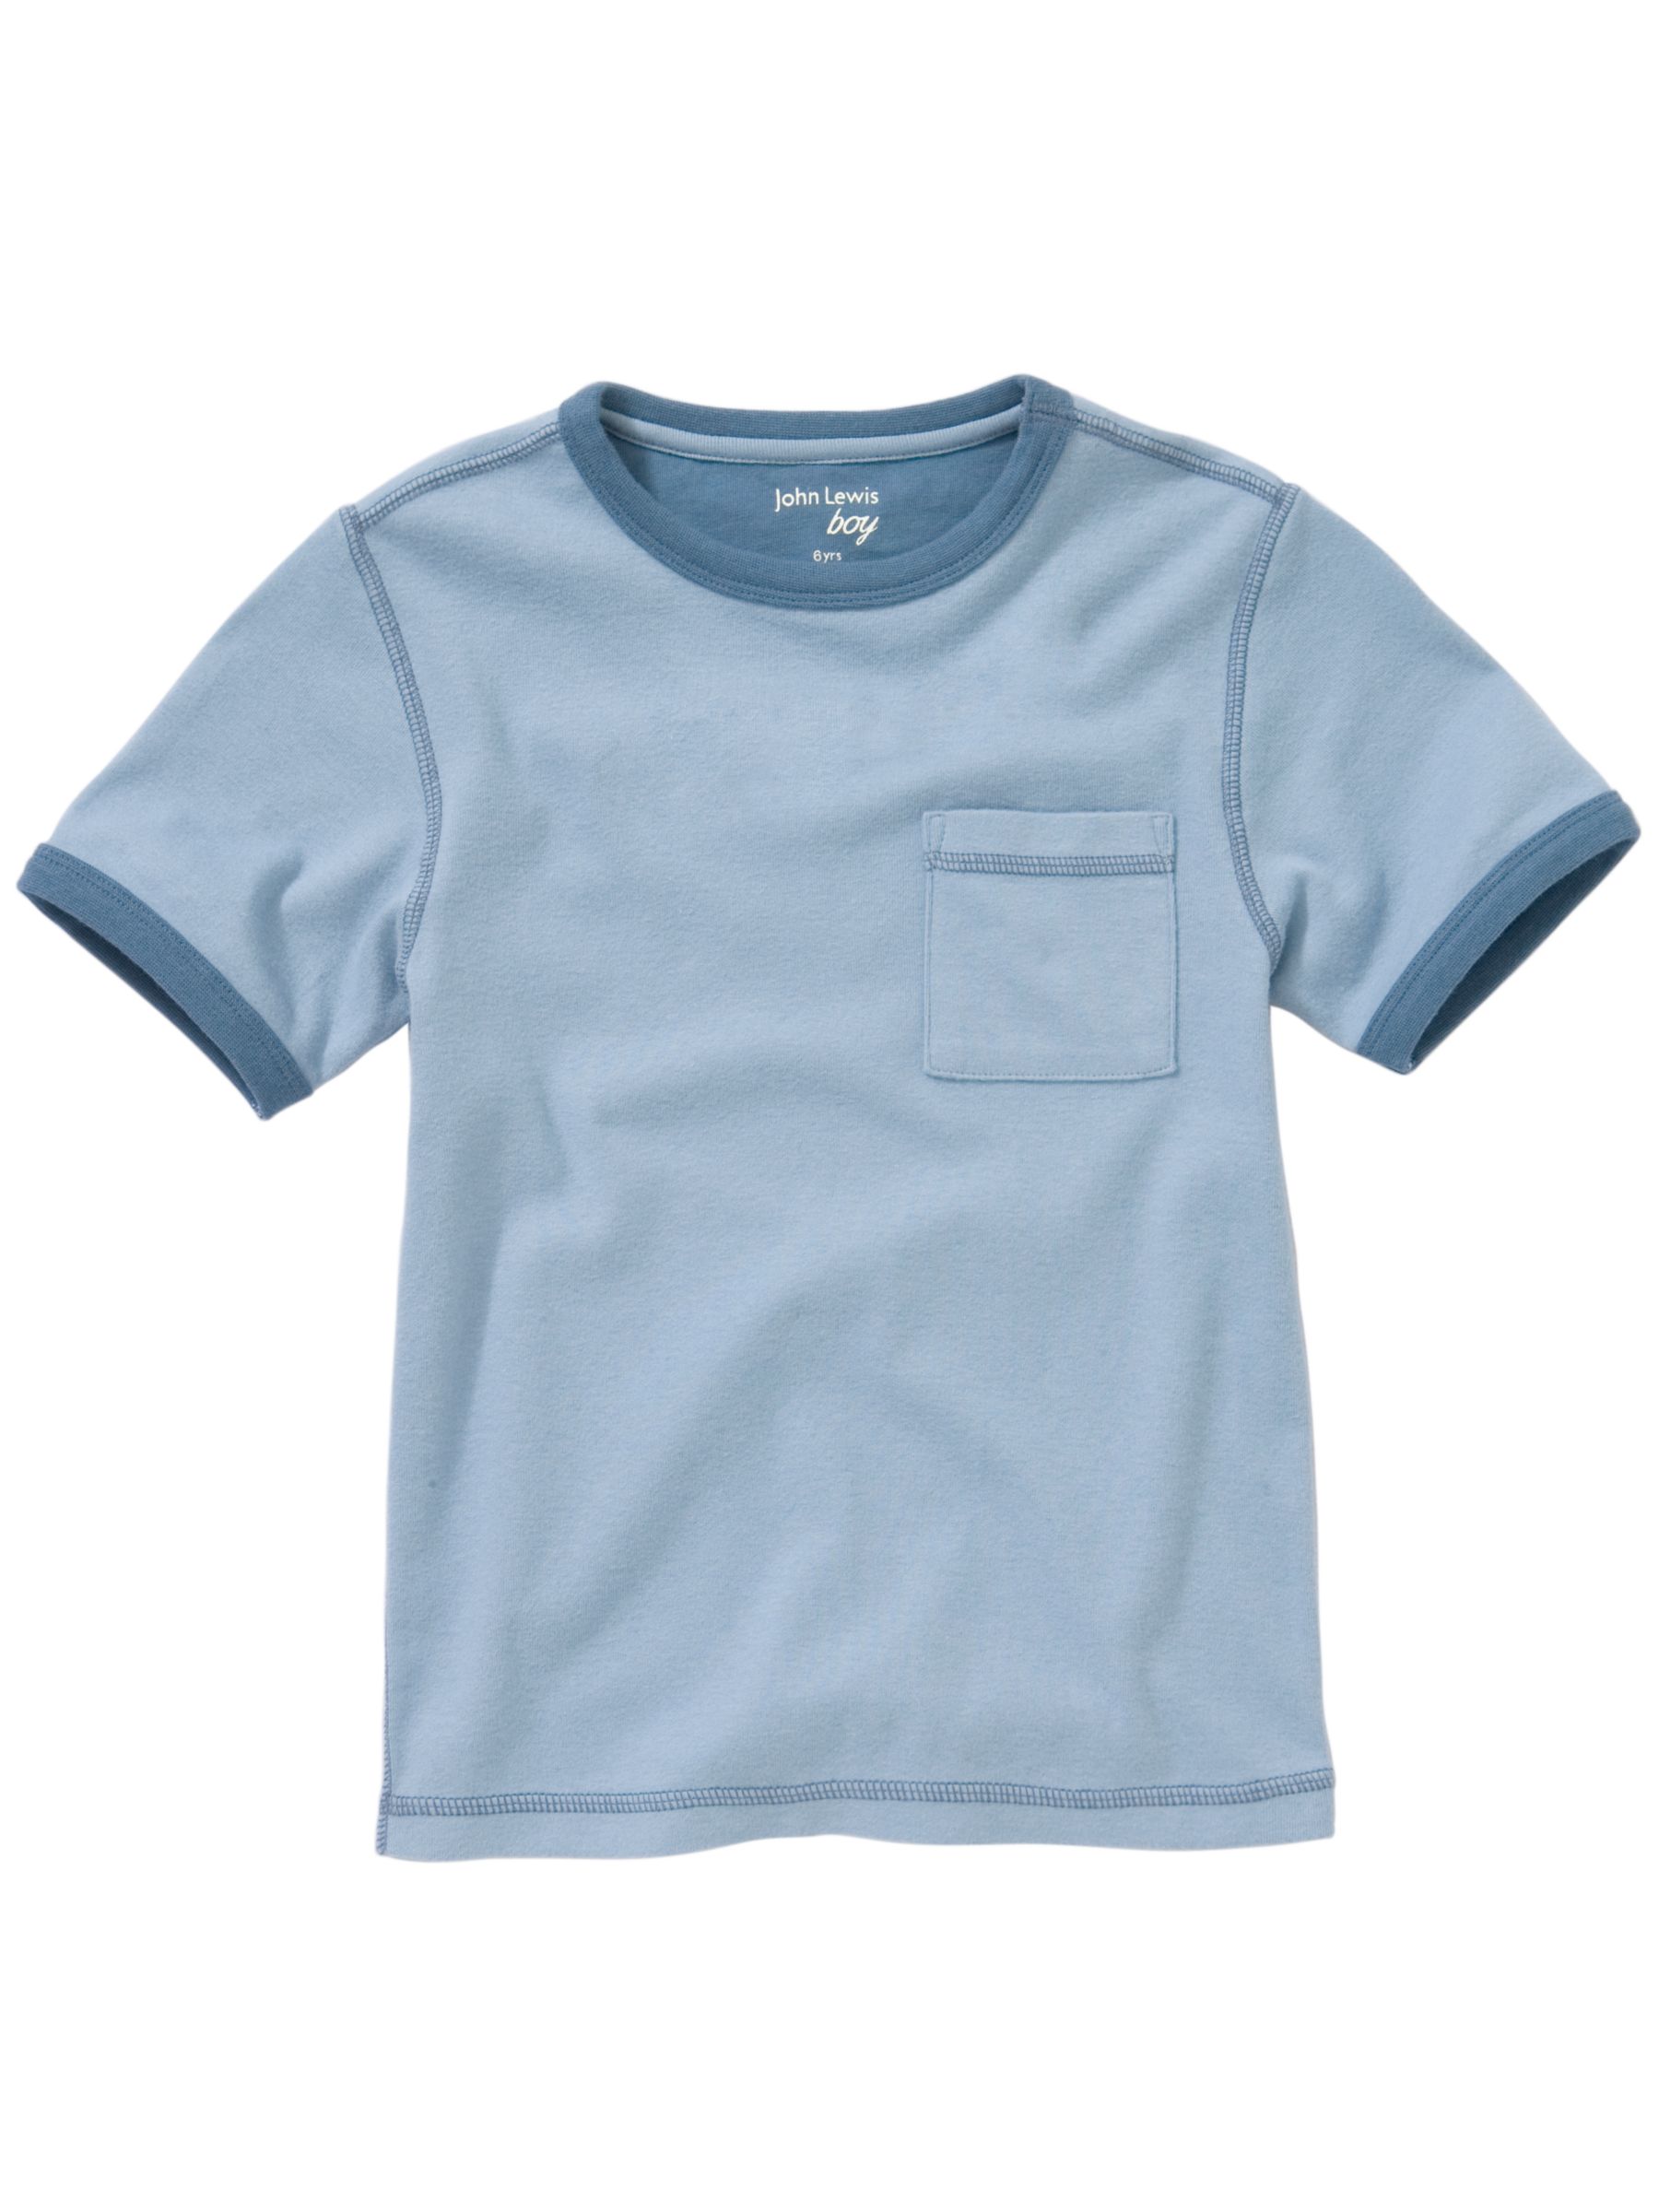 John Lewis Boy Short Sleeve T-Shirt, Blue, 9 years